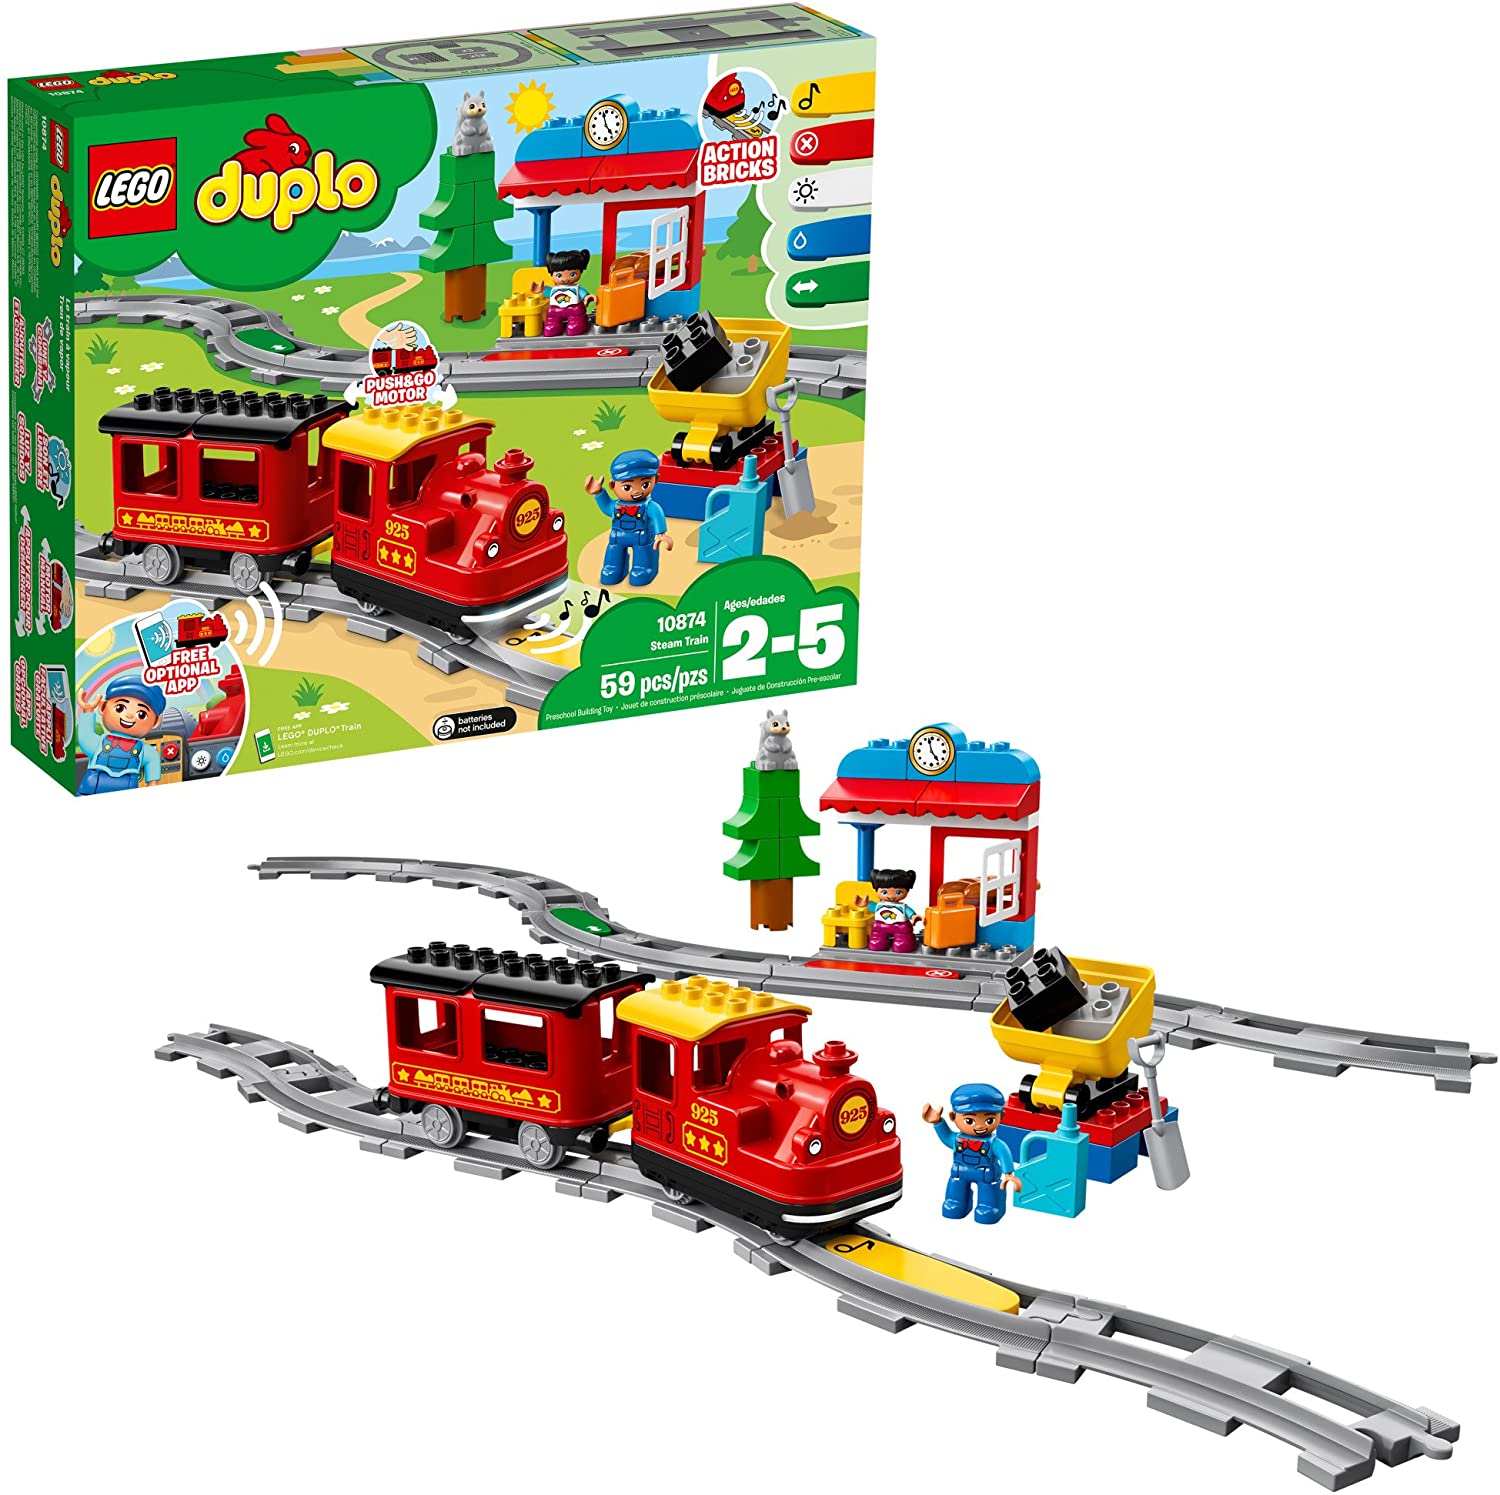 The LEGO DUPLO Steam Train Remote Control Toy Set